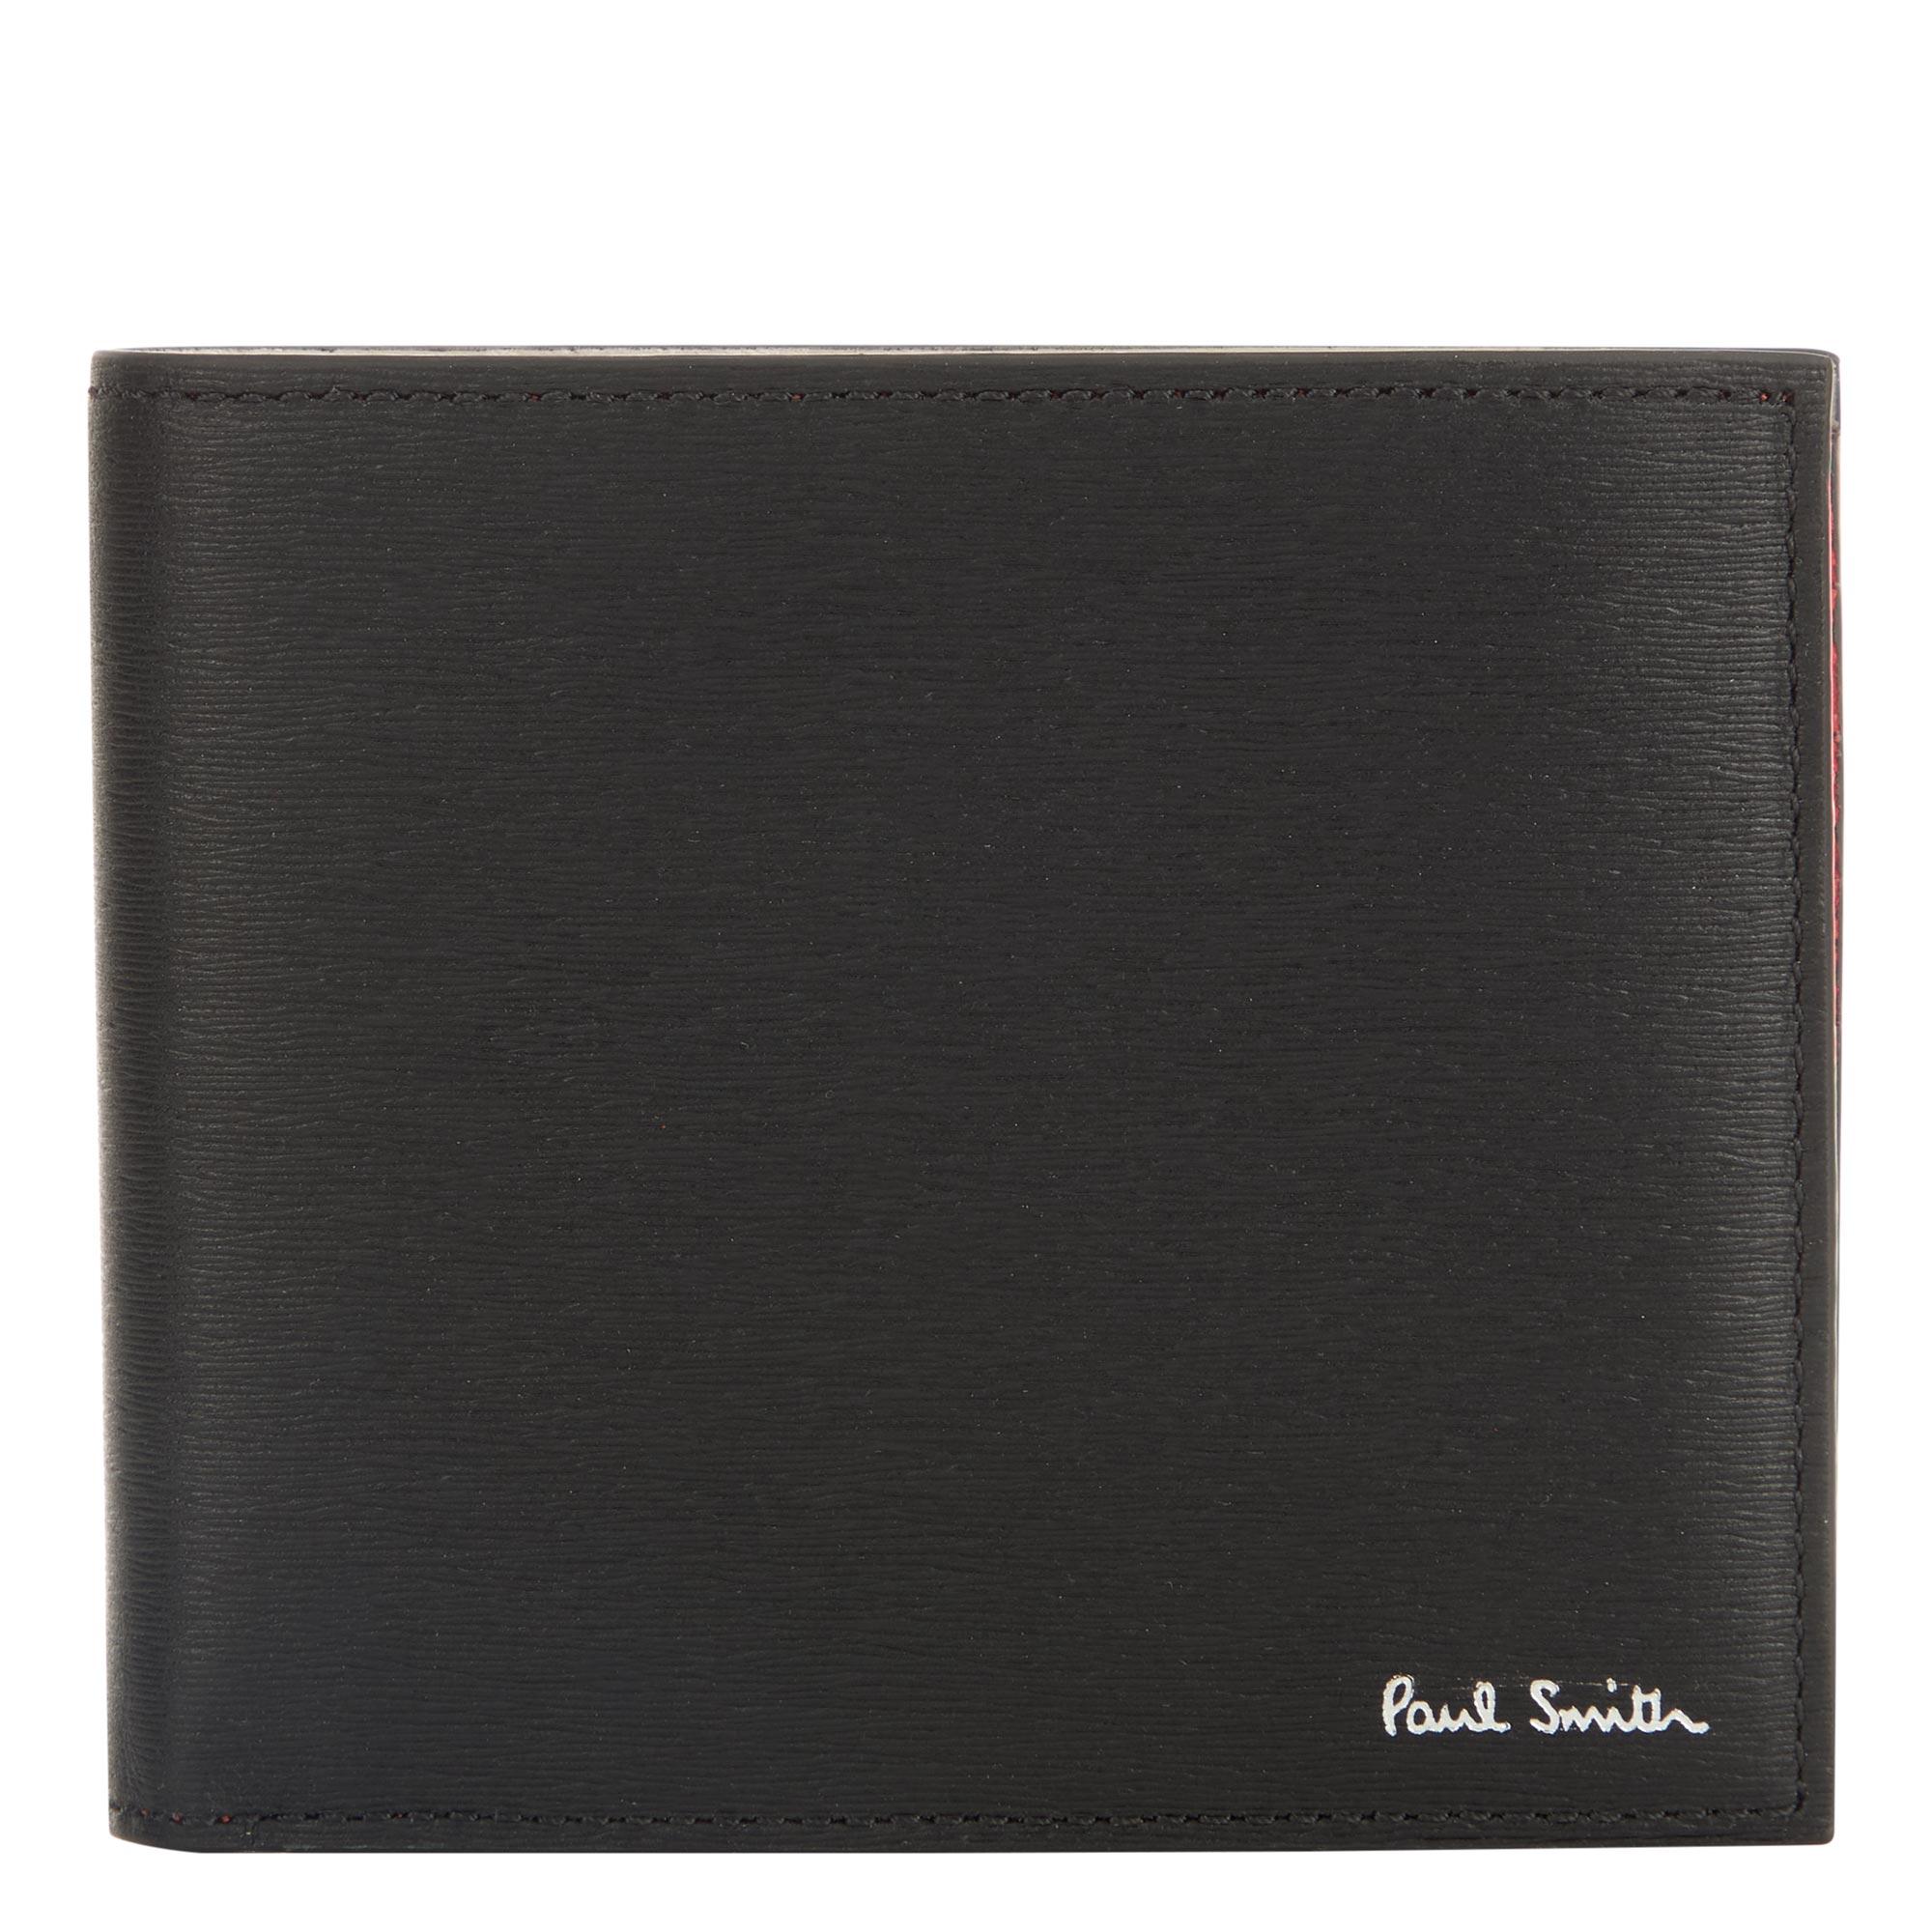 Logo Leather Wallet